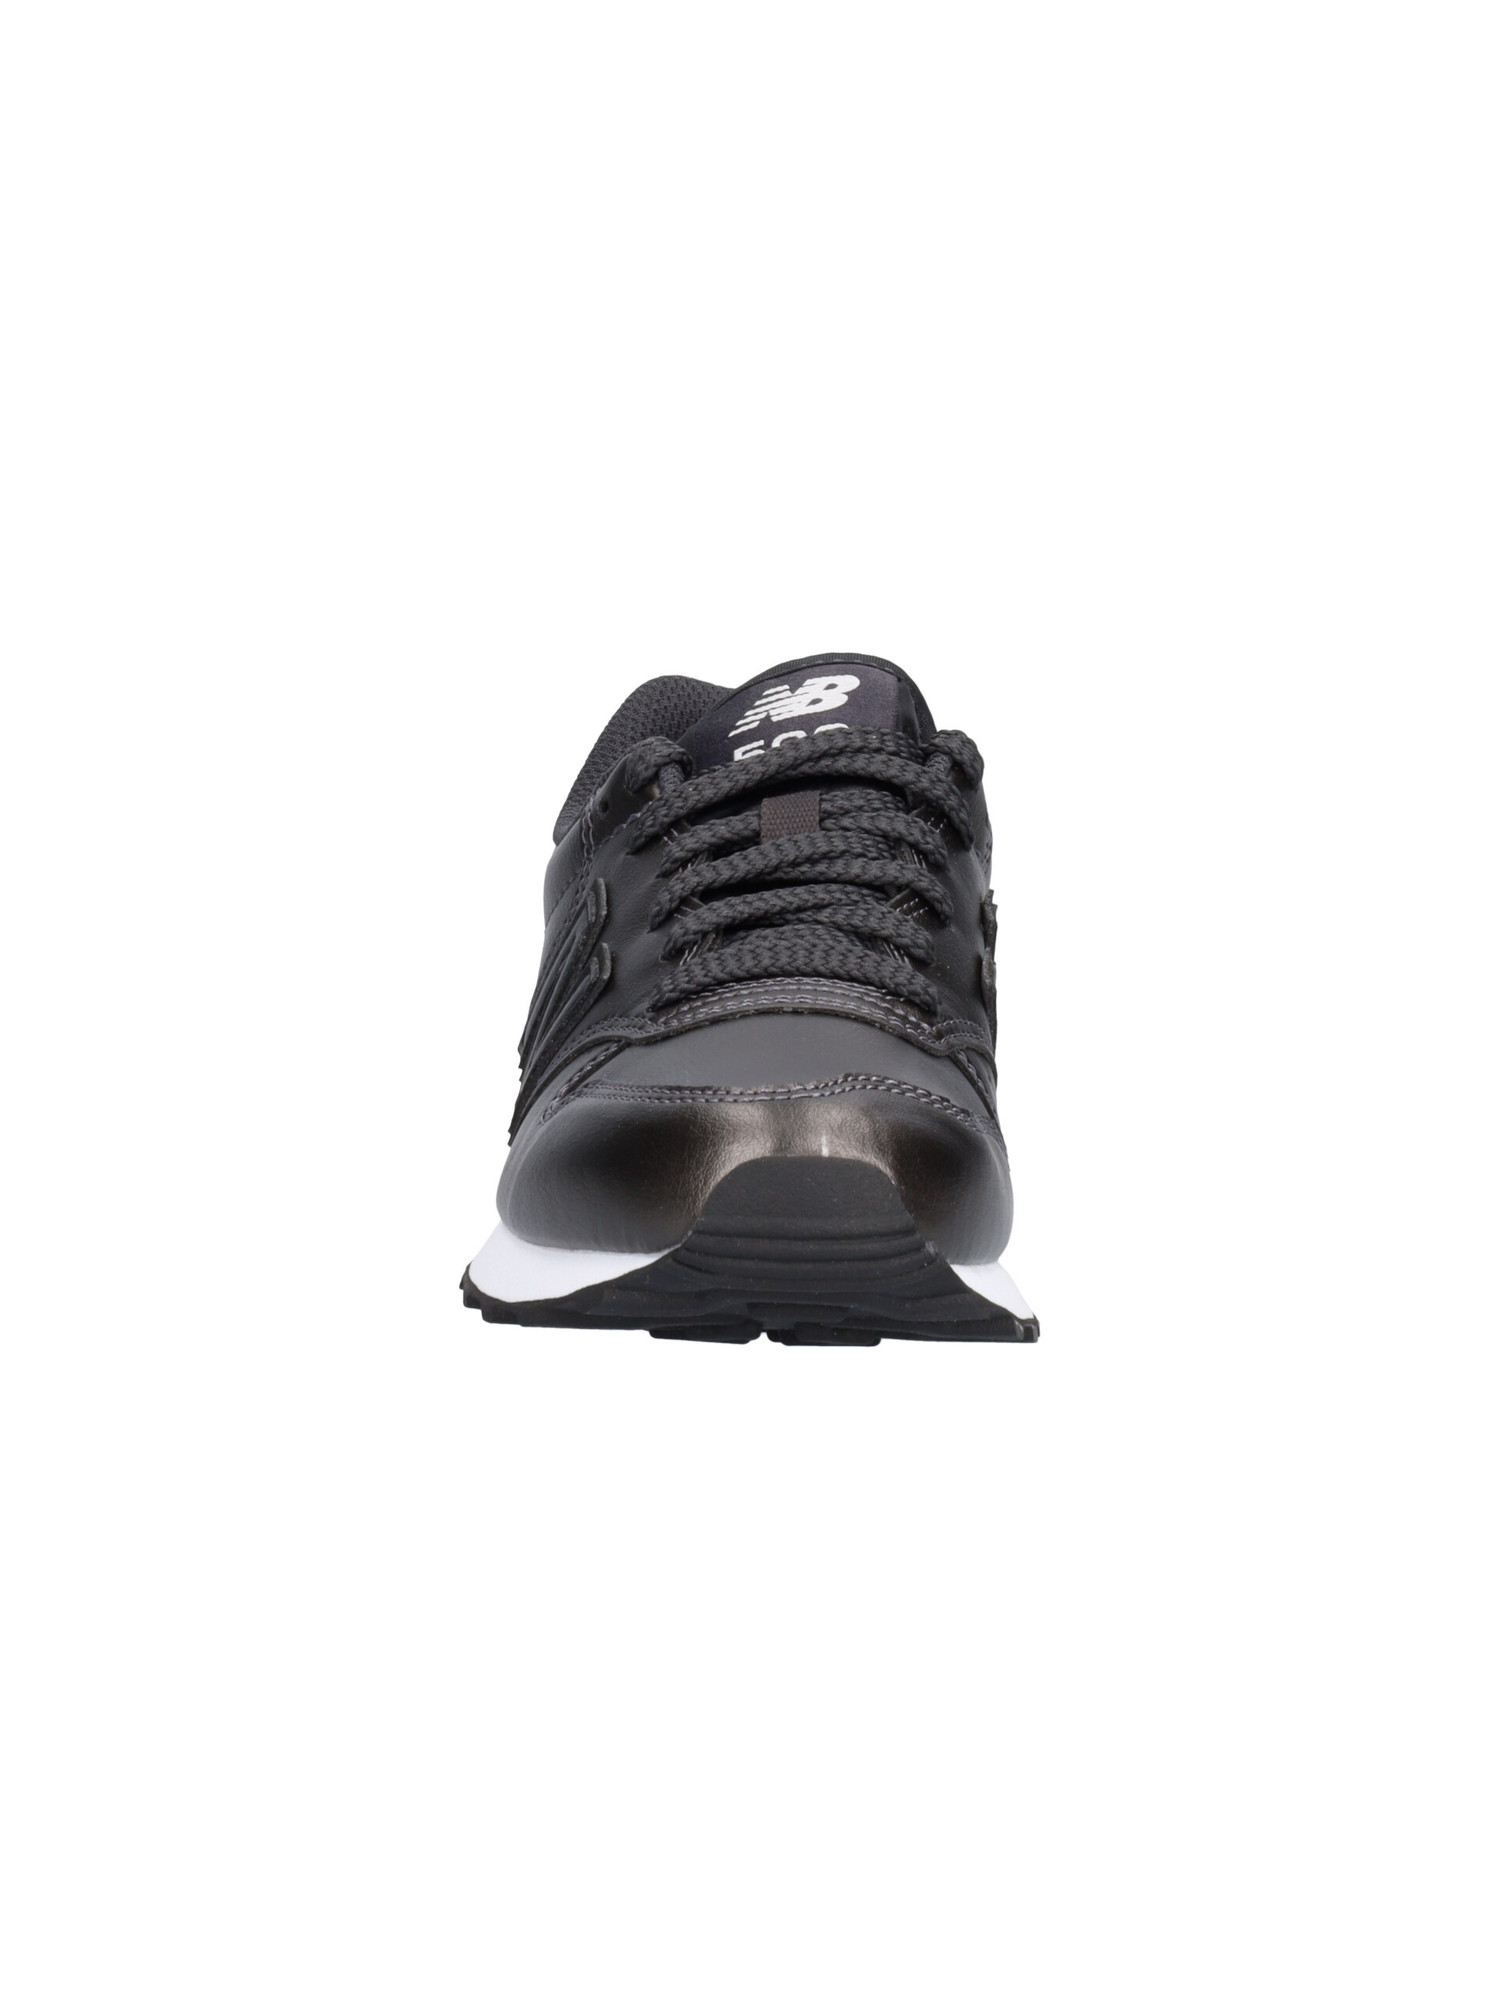 sneaker-new-balance-500-da-donna-nero-metal